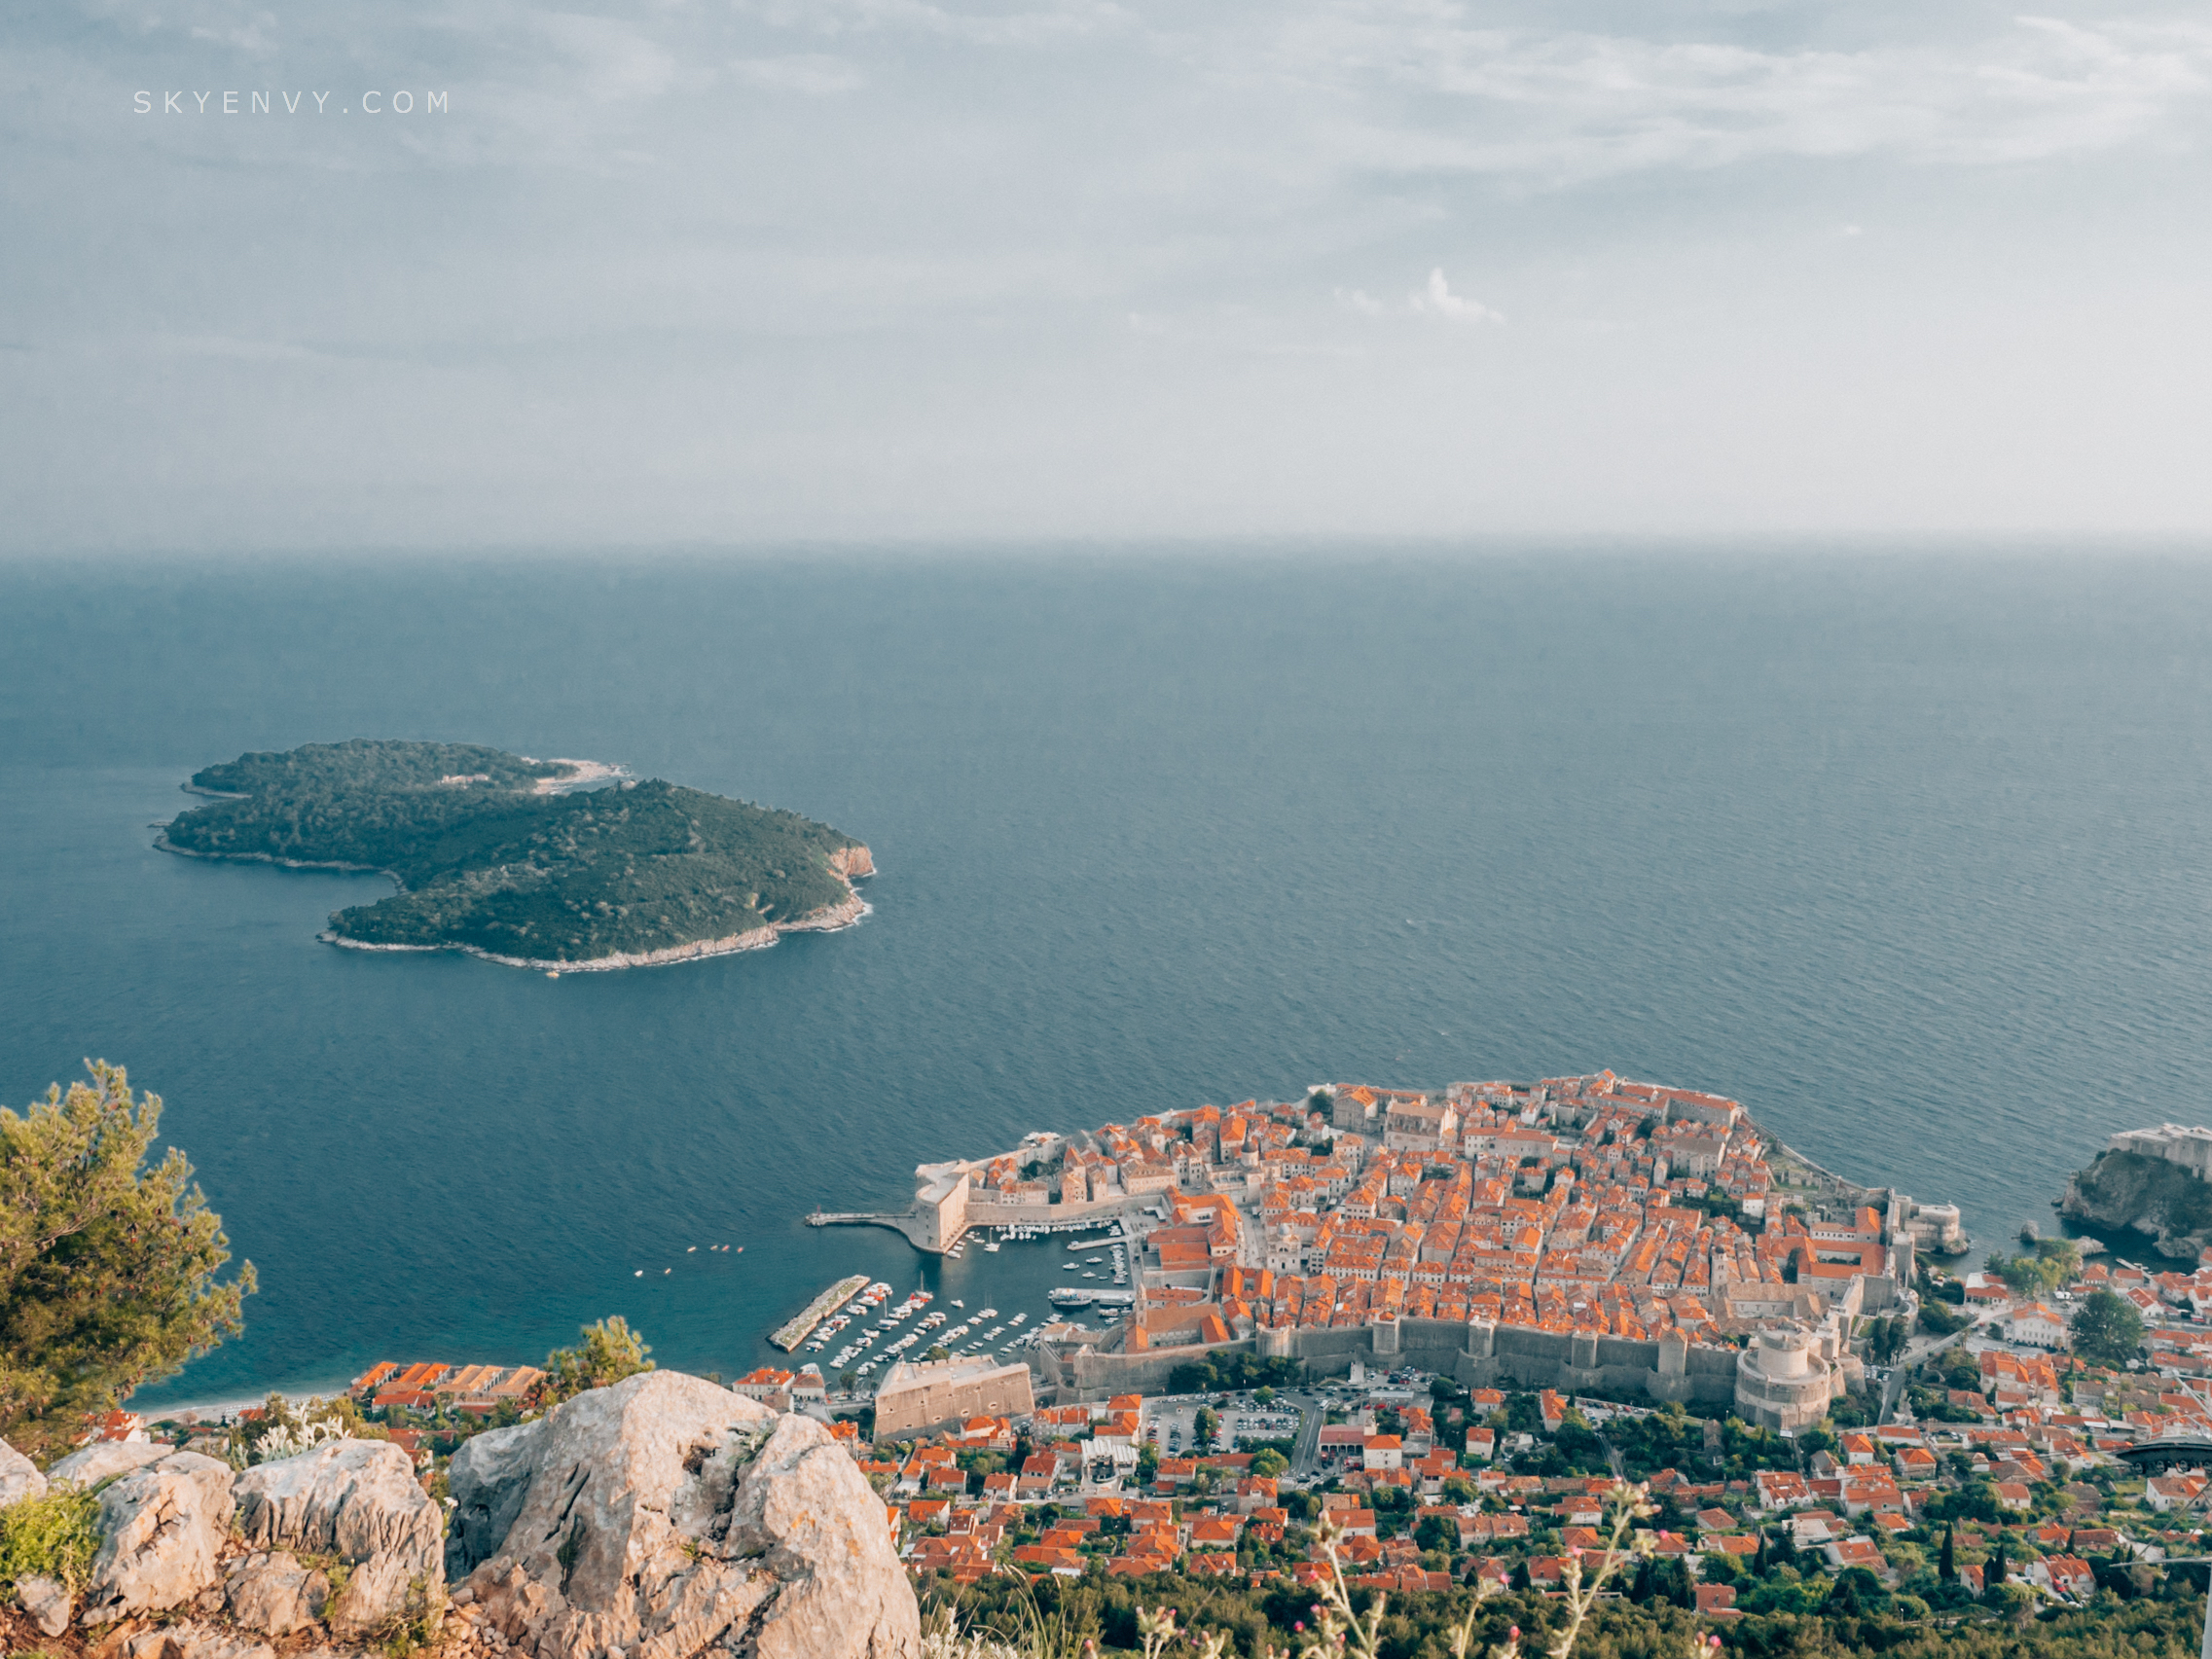 Dubrovnik; Croatia; King's Landing; Mount Srd; Game of Thrones; Cable Car; GOT; Orange rooftops; Terracotta Roofs; Adriatic Coast; Balkans; Lokrum Island